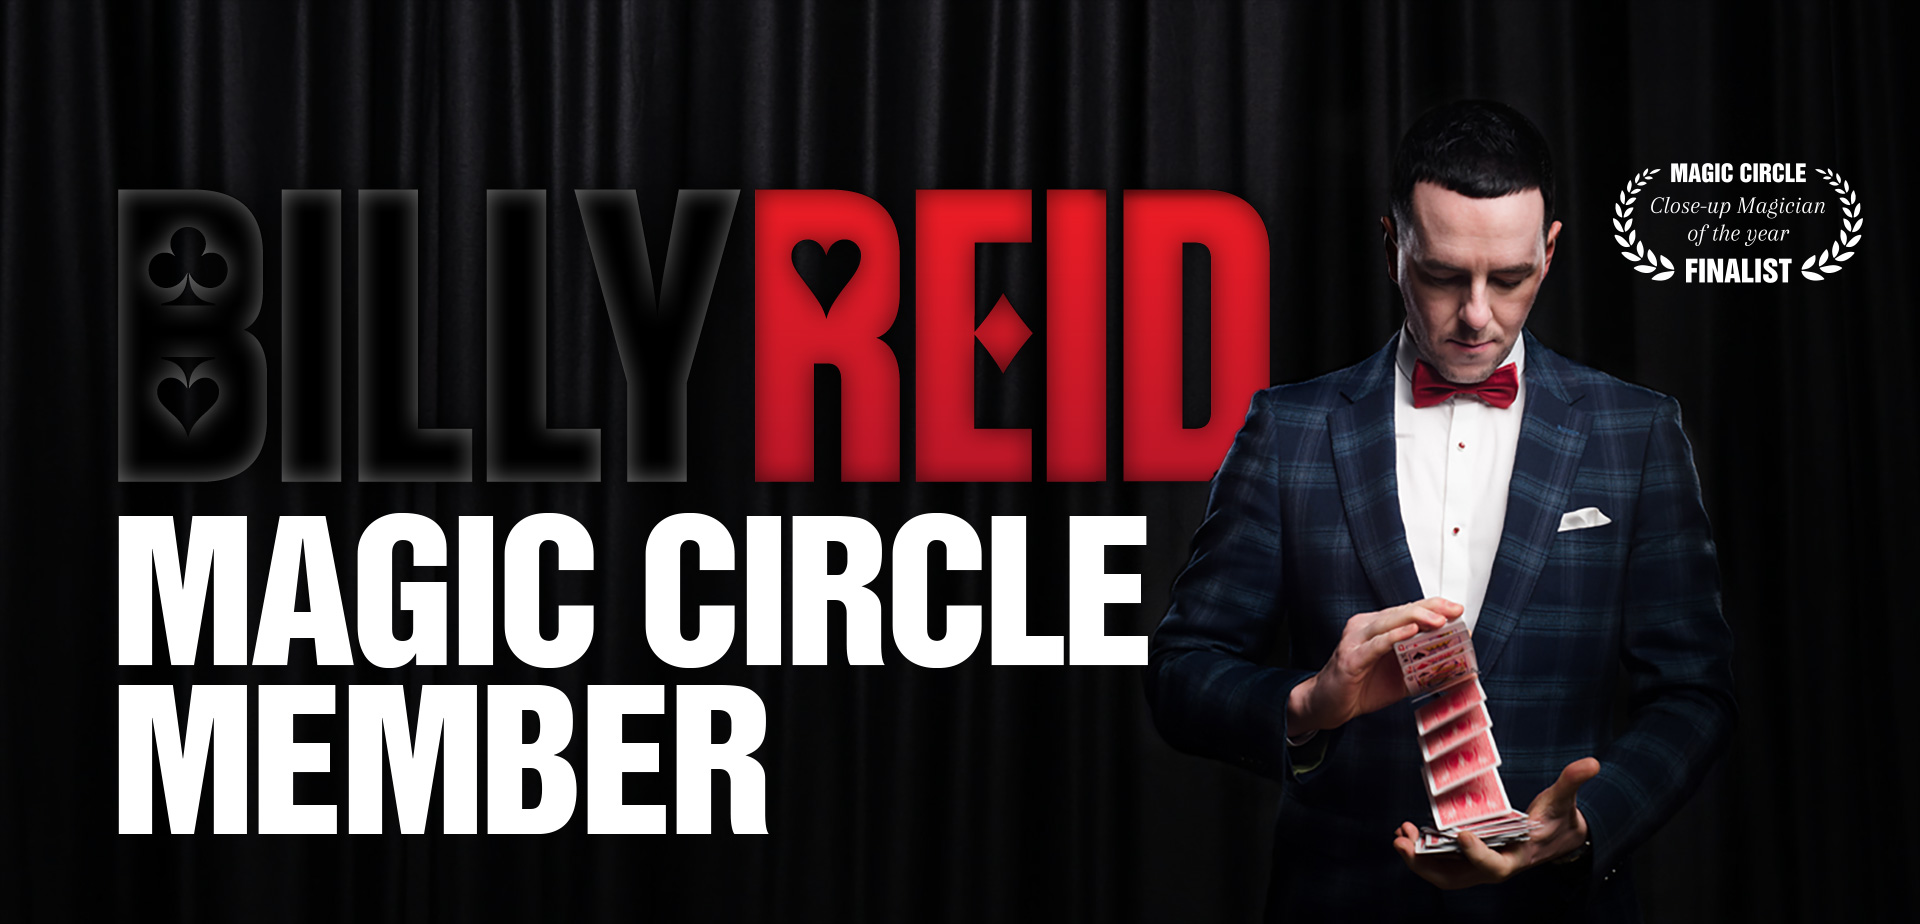 Billy Reid Magic Circle Member